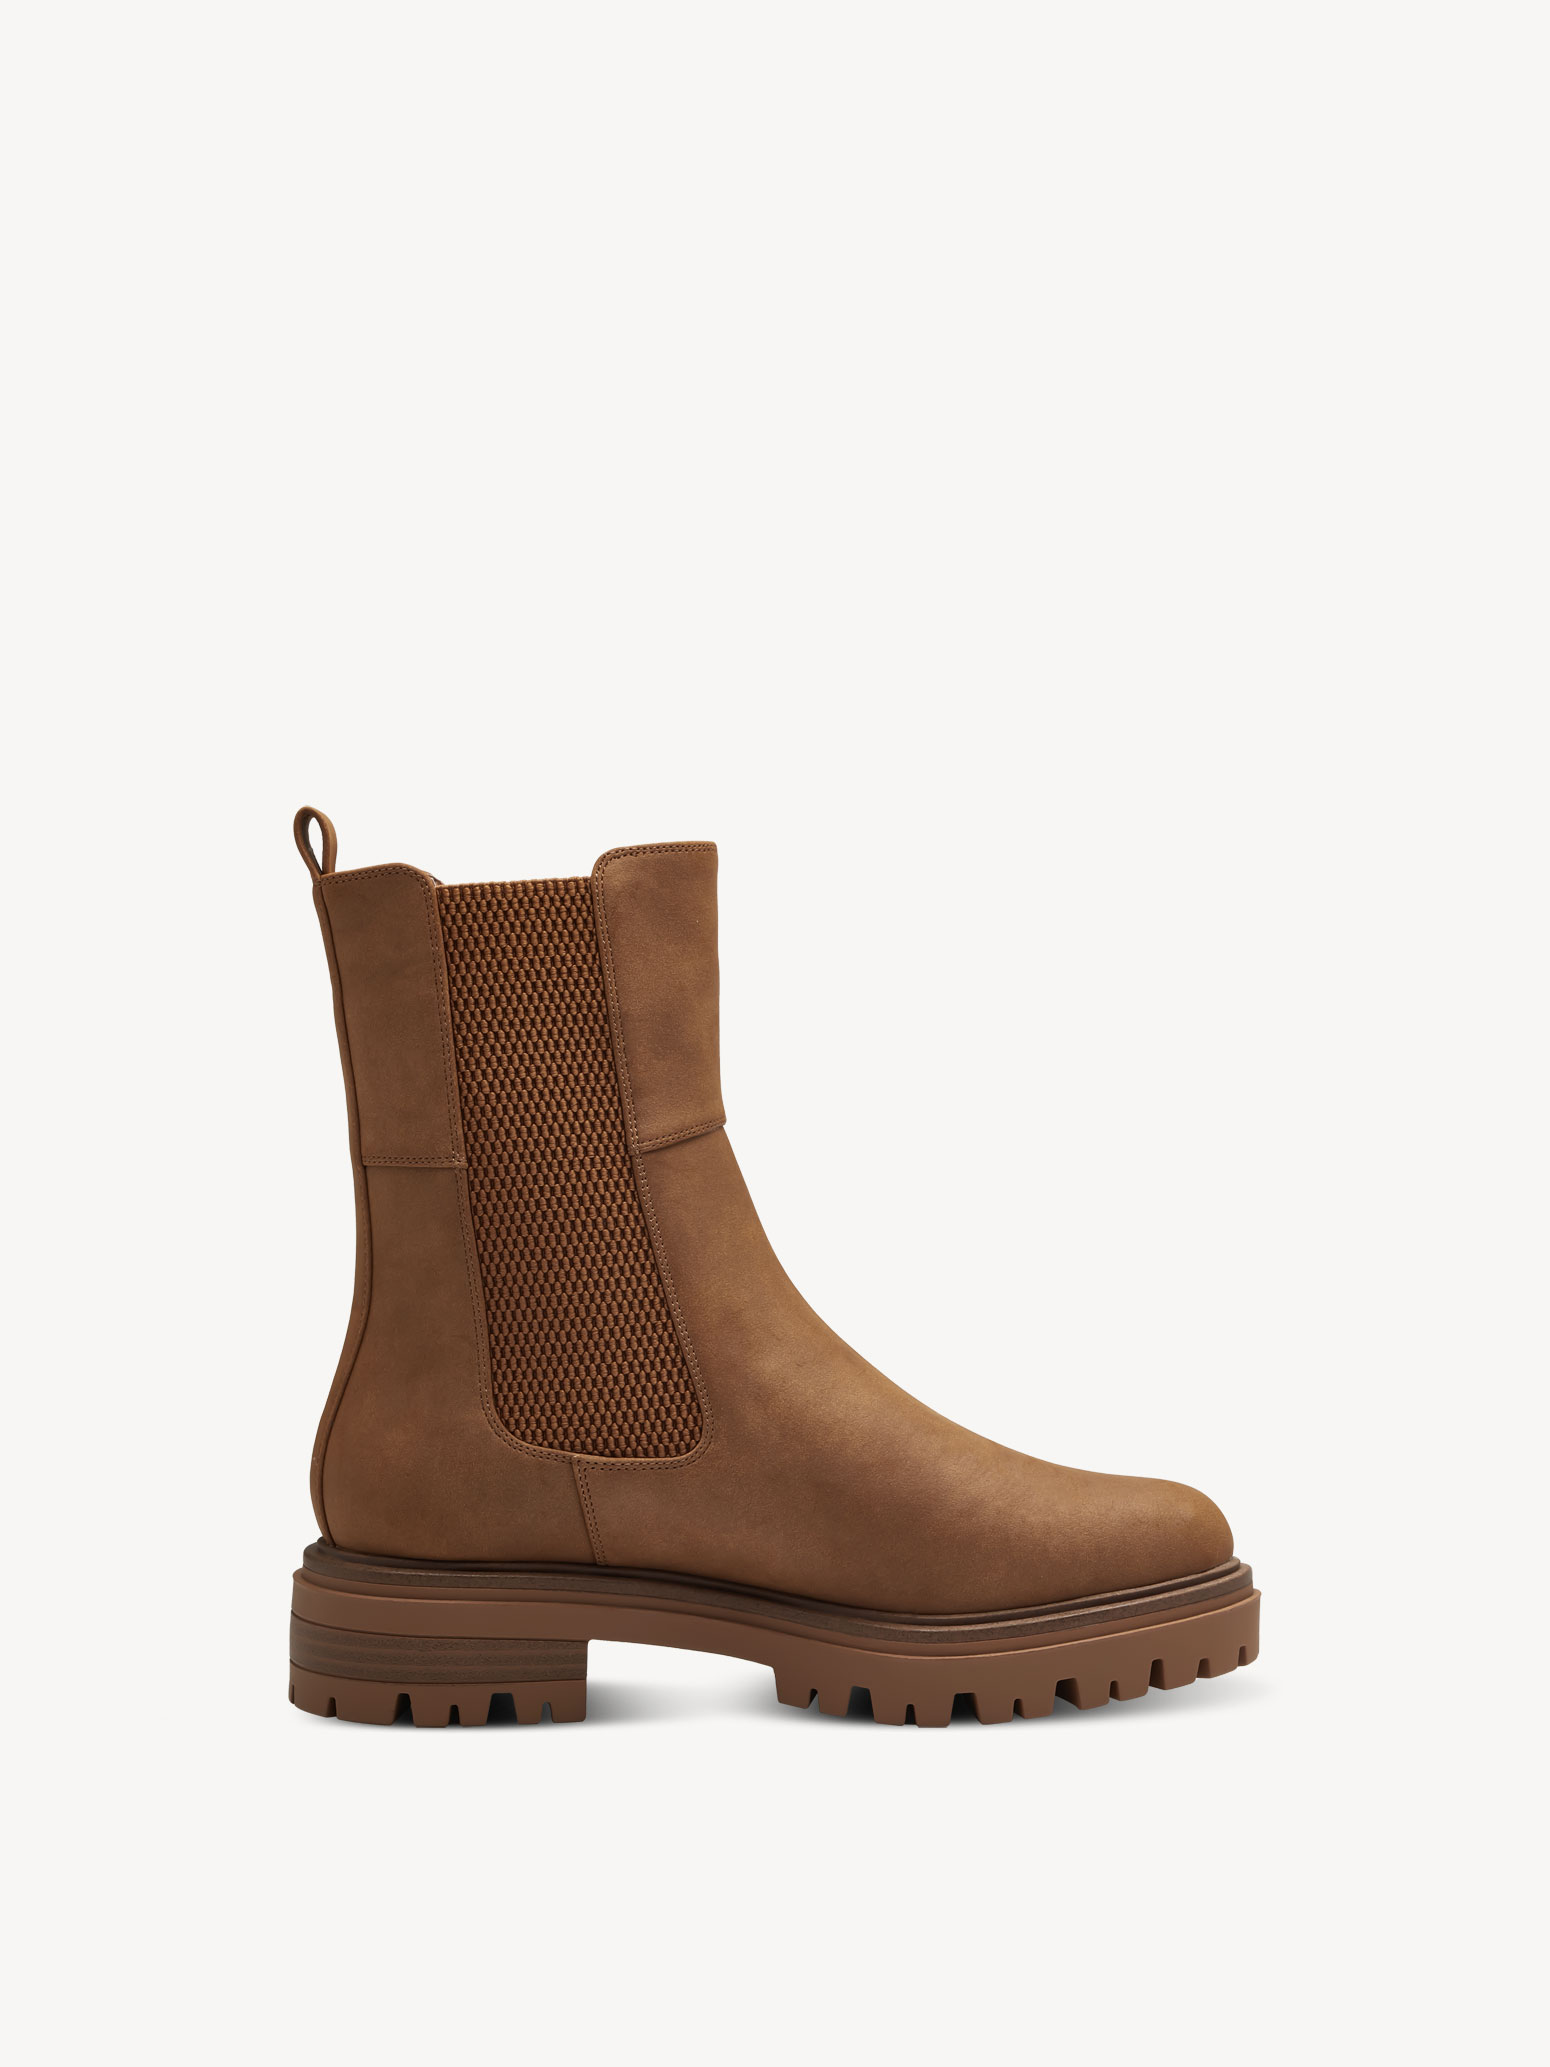 Chelsea boot - brown, COGNAC, hi-res